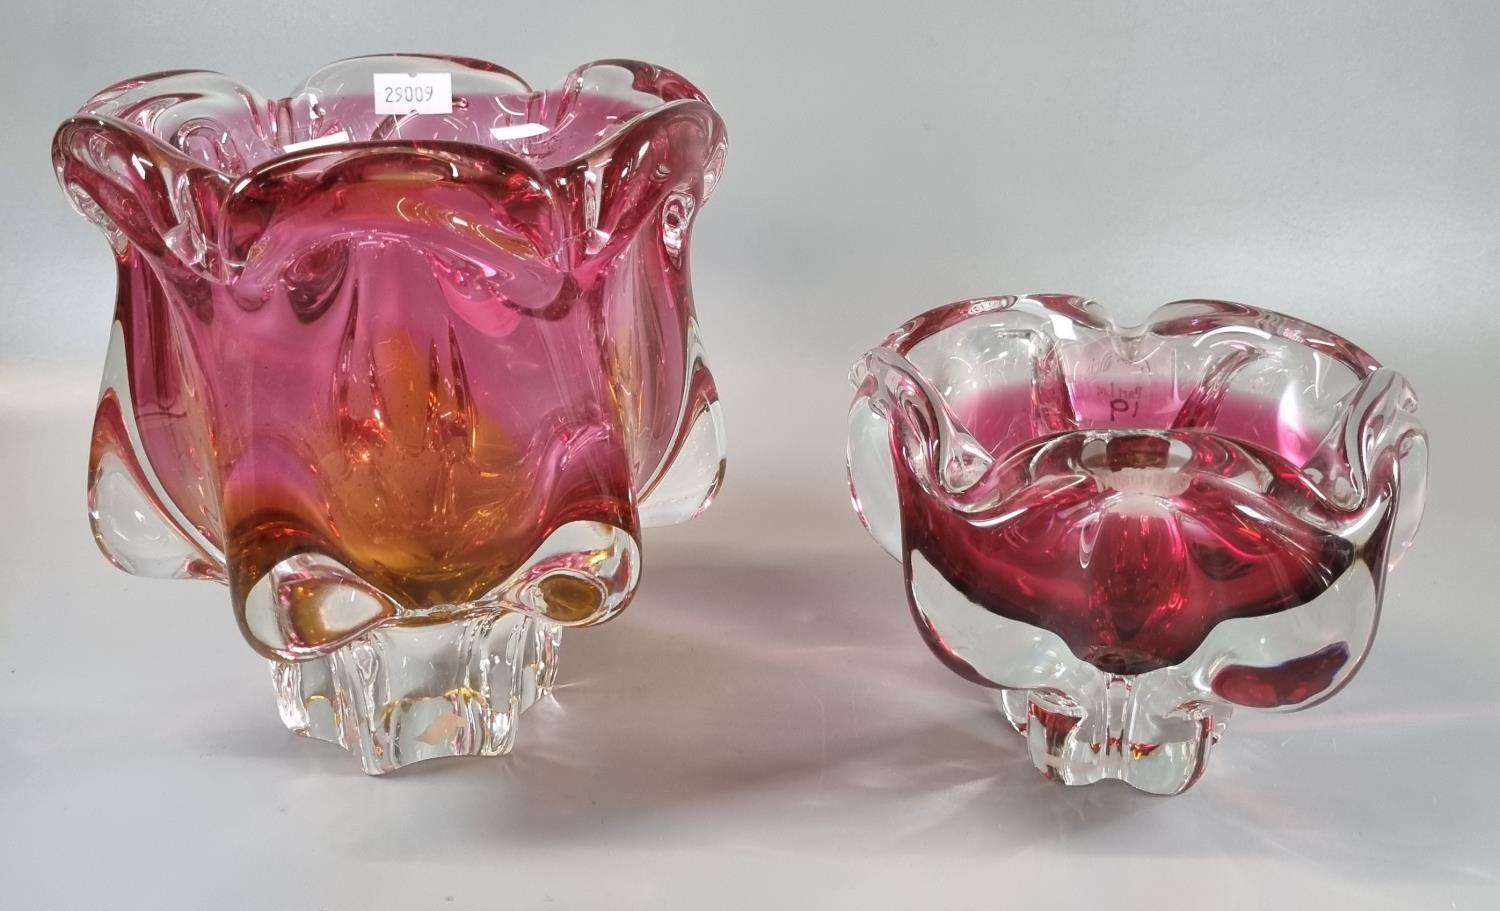 Two similar cranberry Art Glass Murano style vases. (2) (B.P. 21% + VAT)